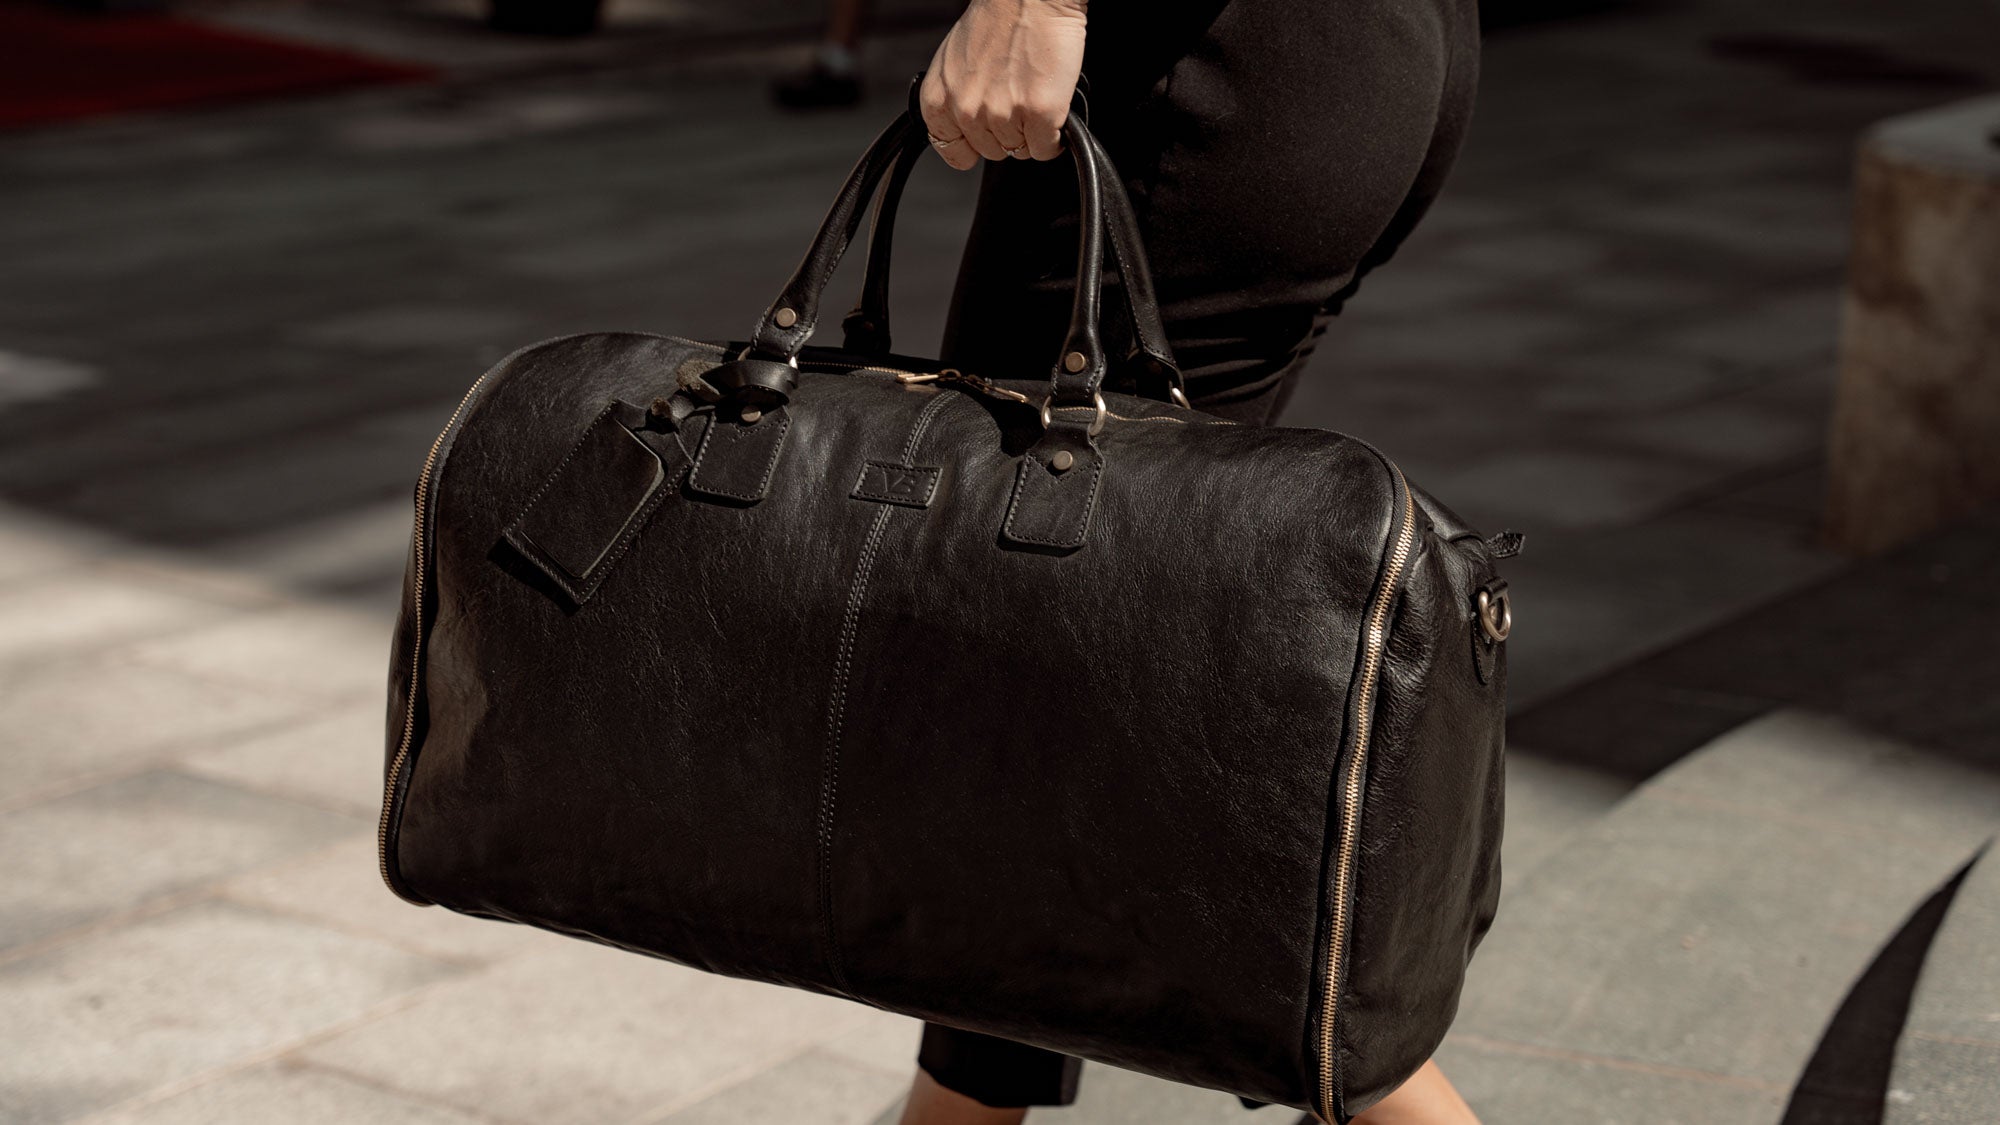 Designer Garment Travel Bag for Women with 2-in-1 Compartment for Dresses -  Von Baer